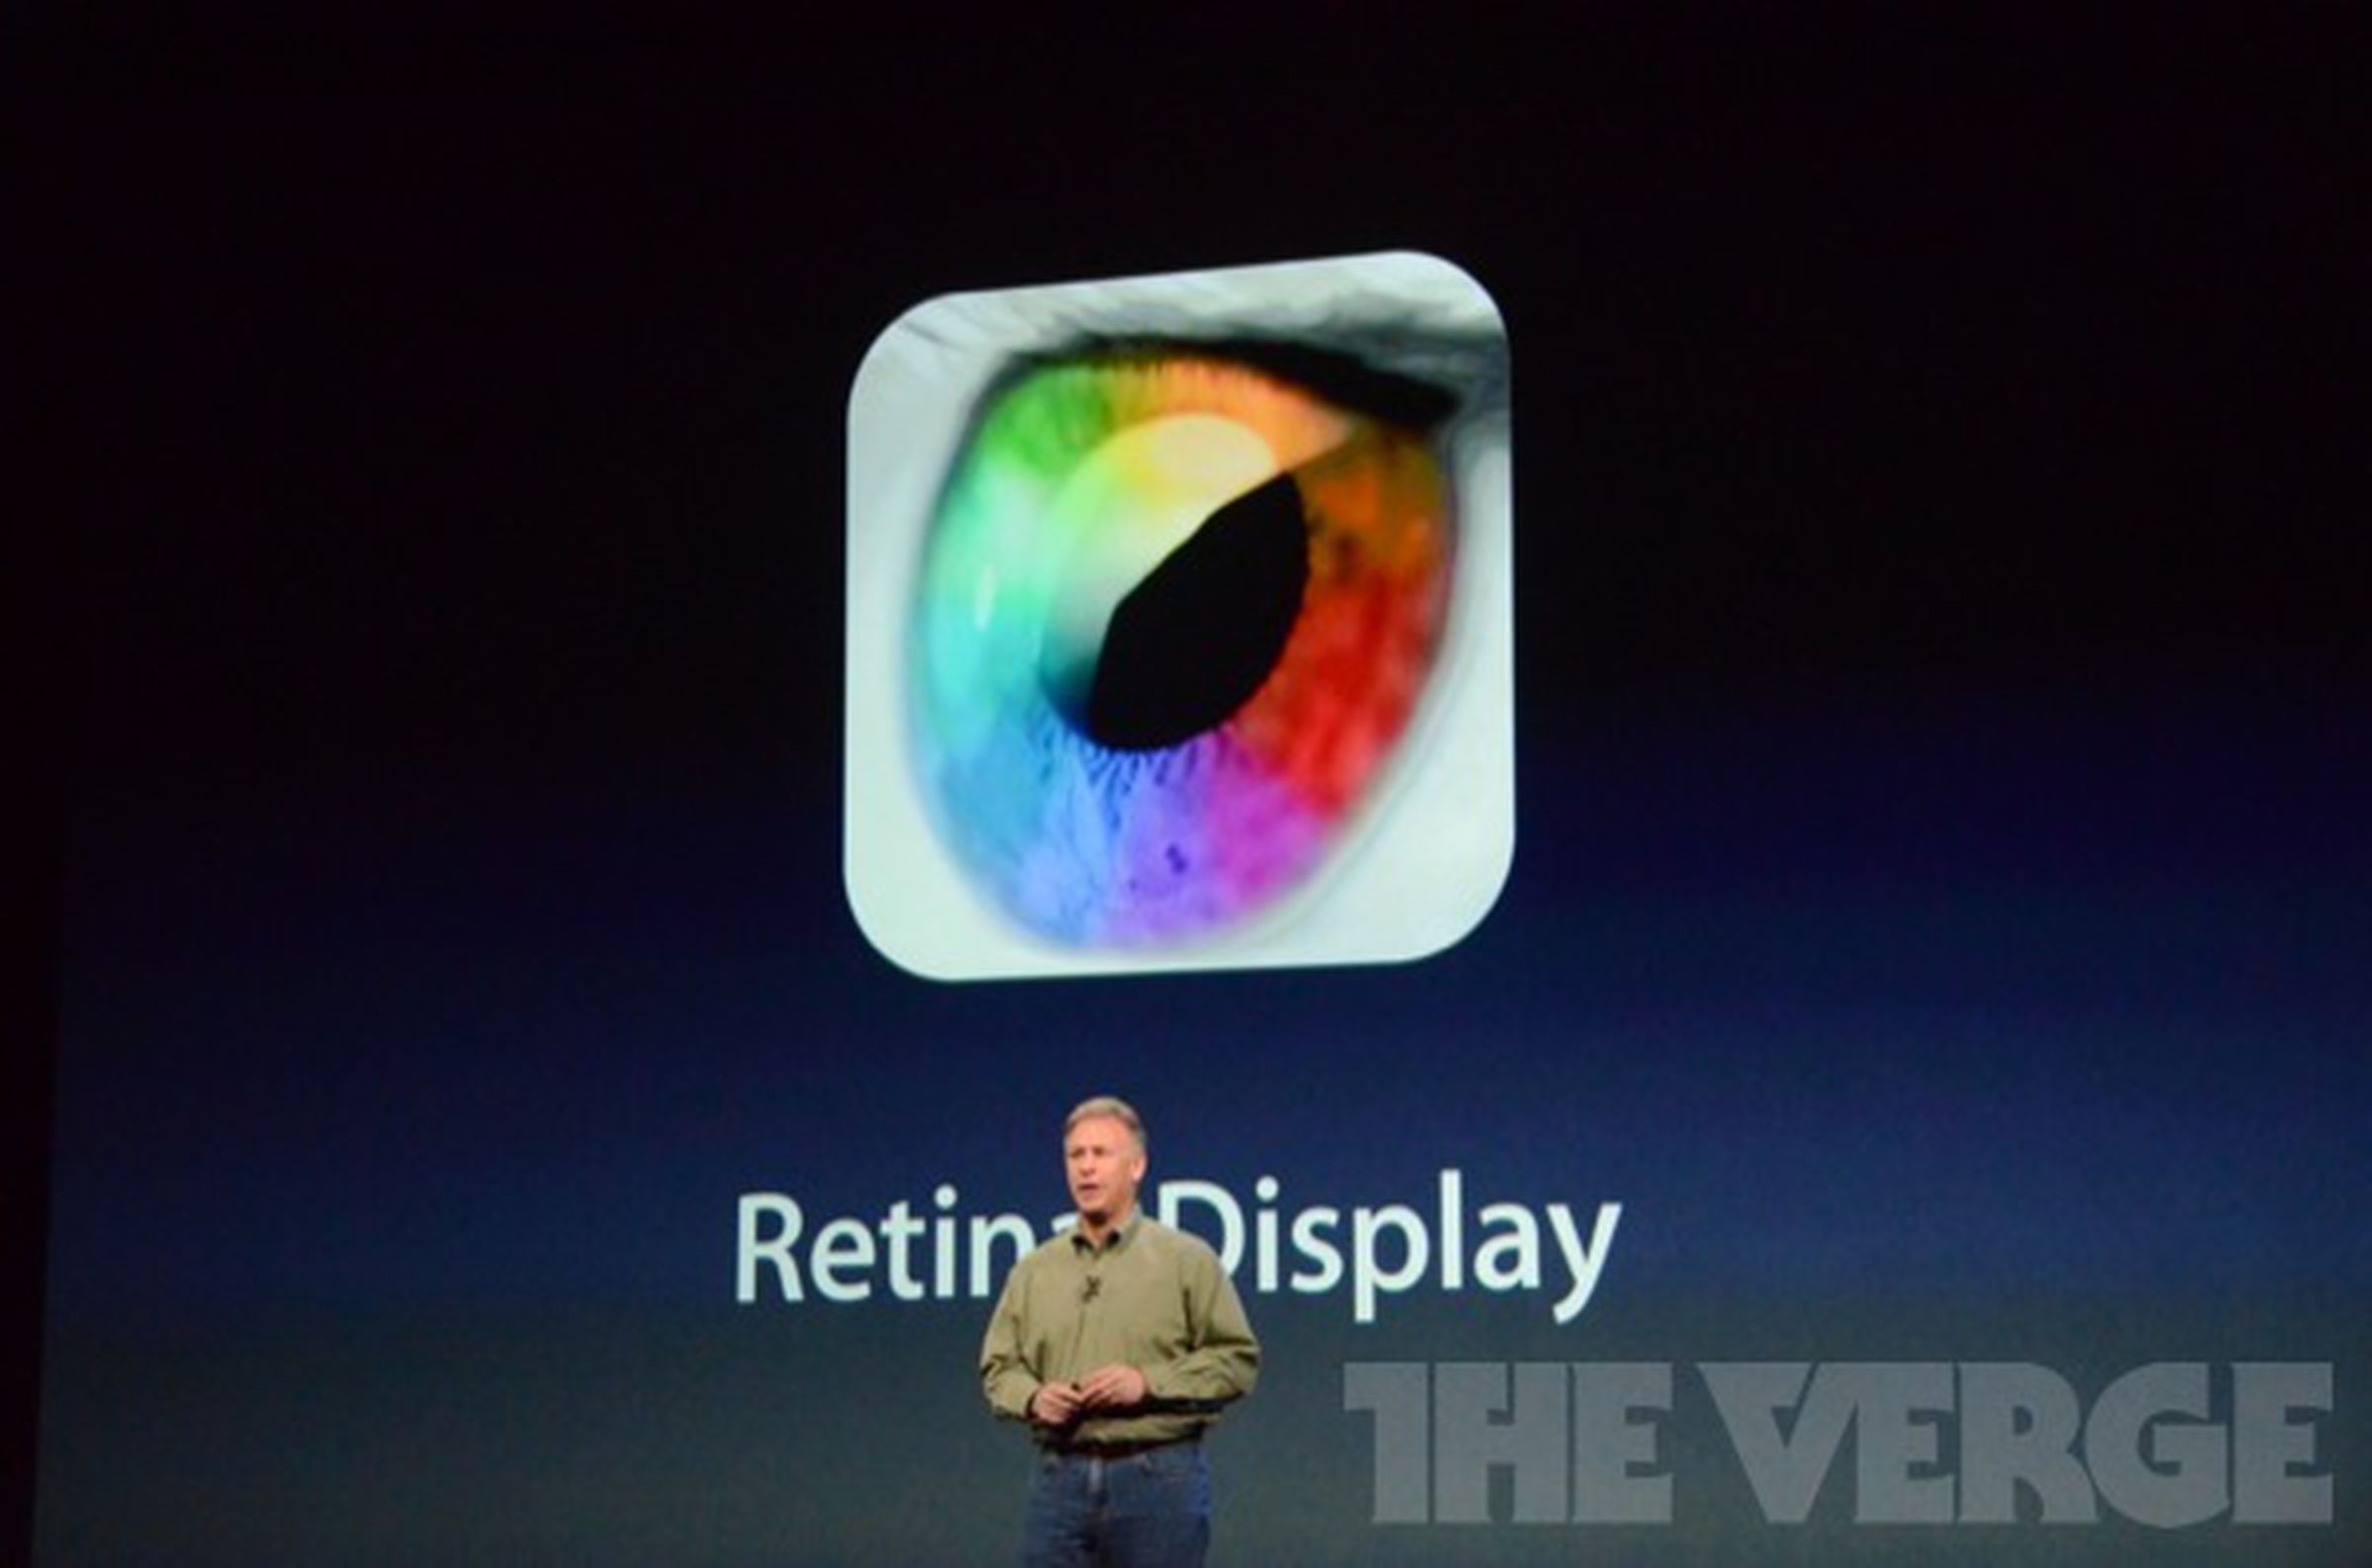 New iPad announcement photos